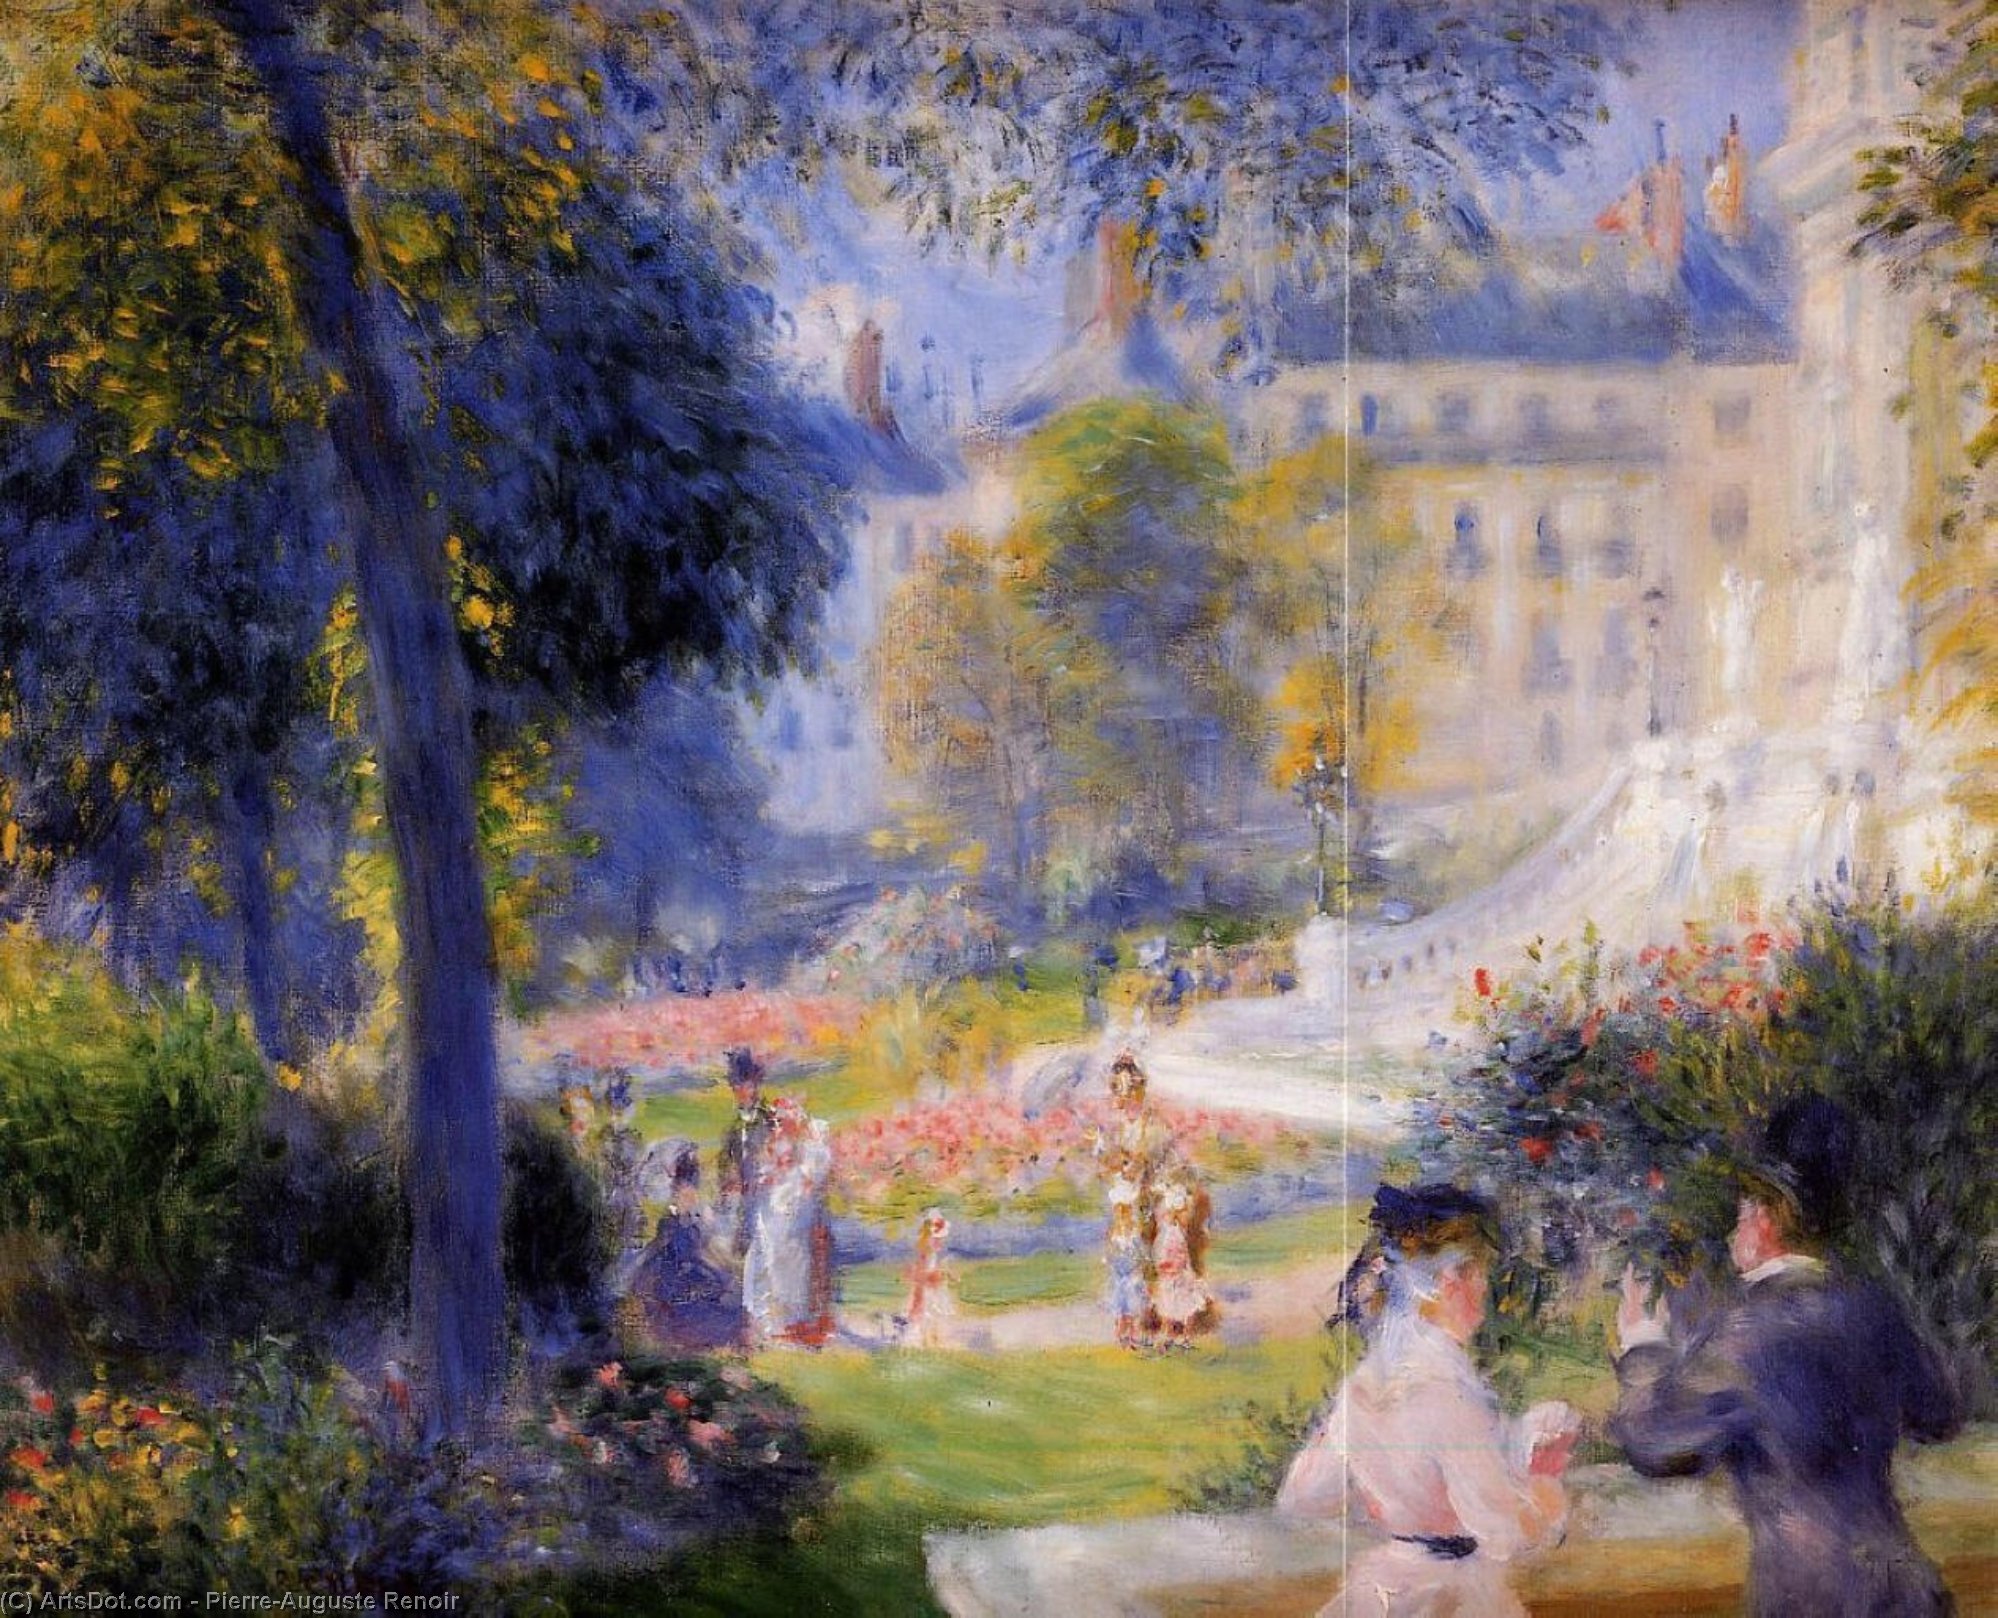 Wikioo.org - The Encyclopedia of Fine Arts - Painting, Artwork by Pierre-Auguste Renoir - Place de la Trinite